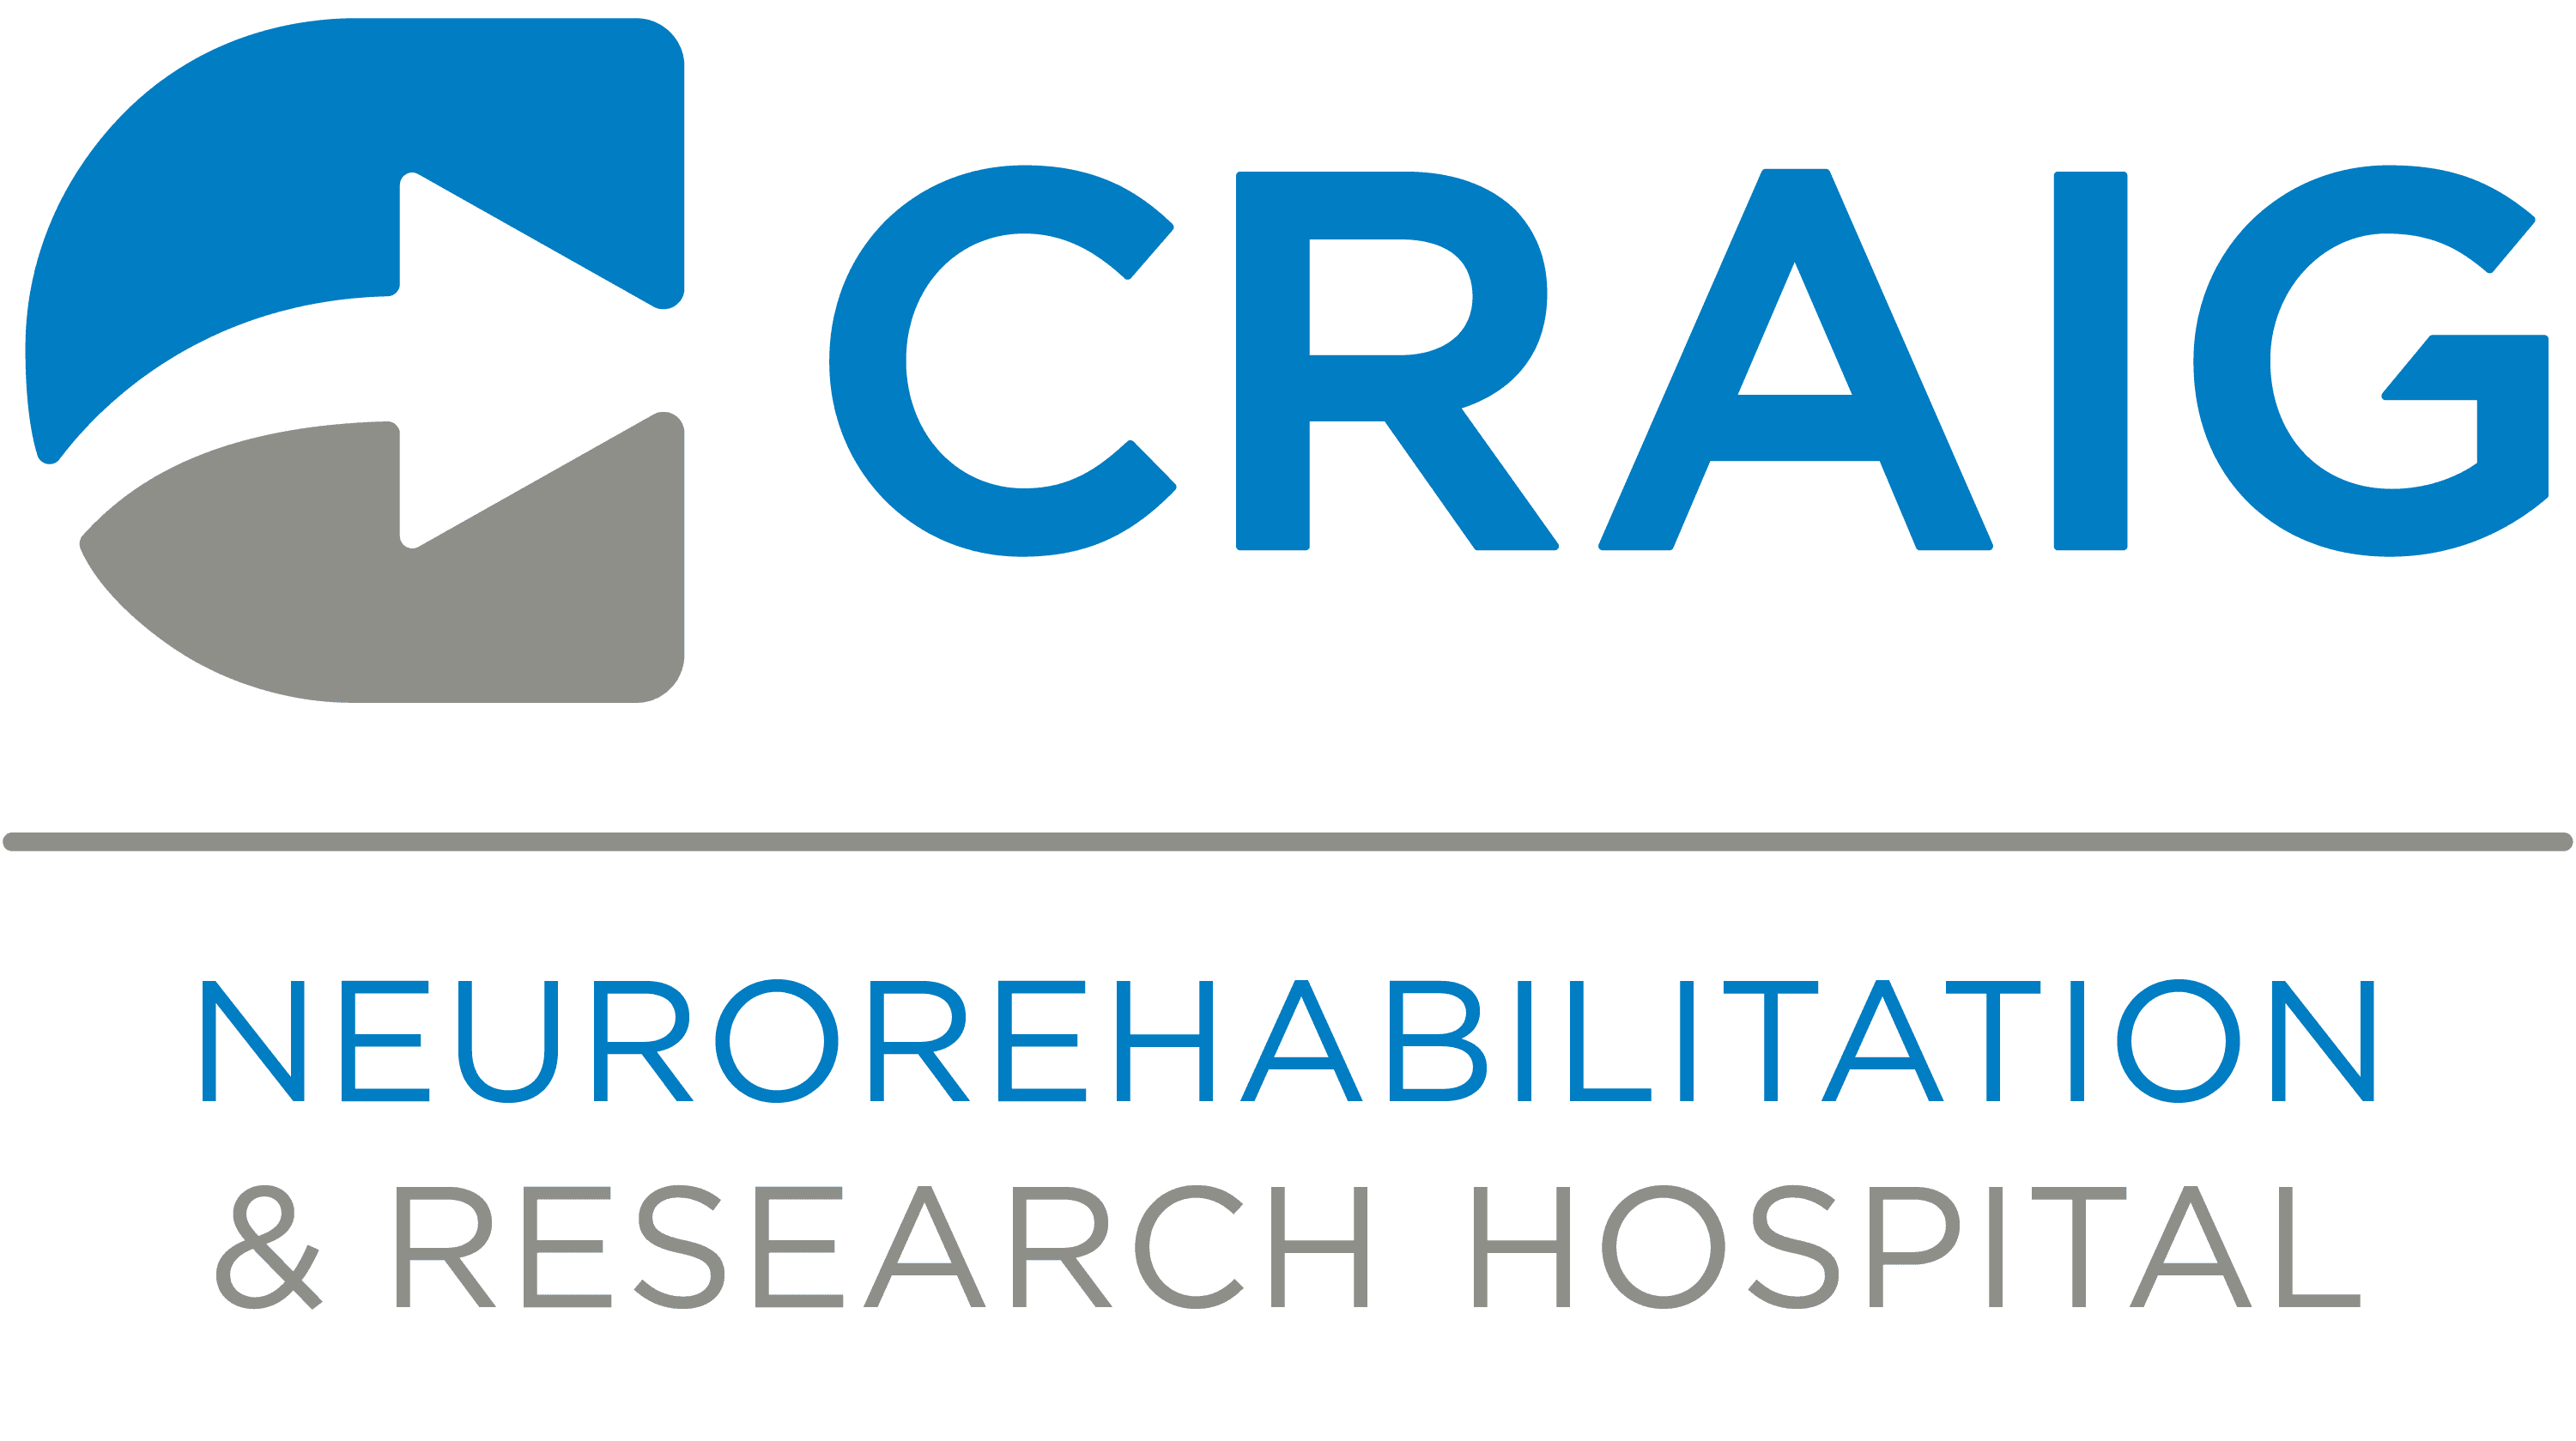 Craig Hospital